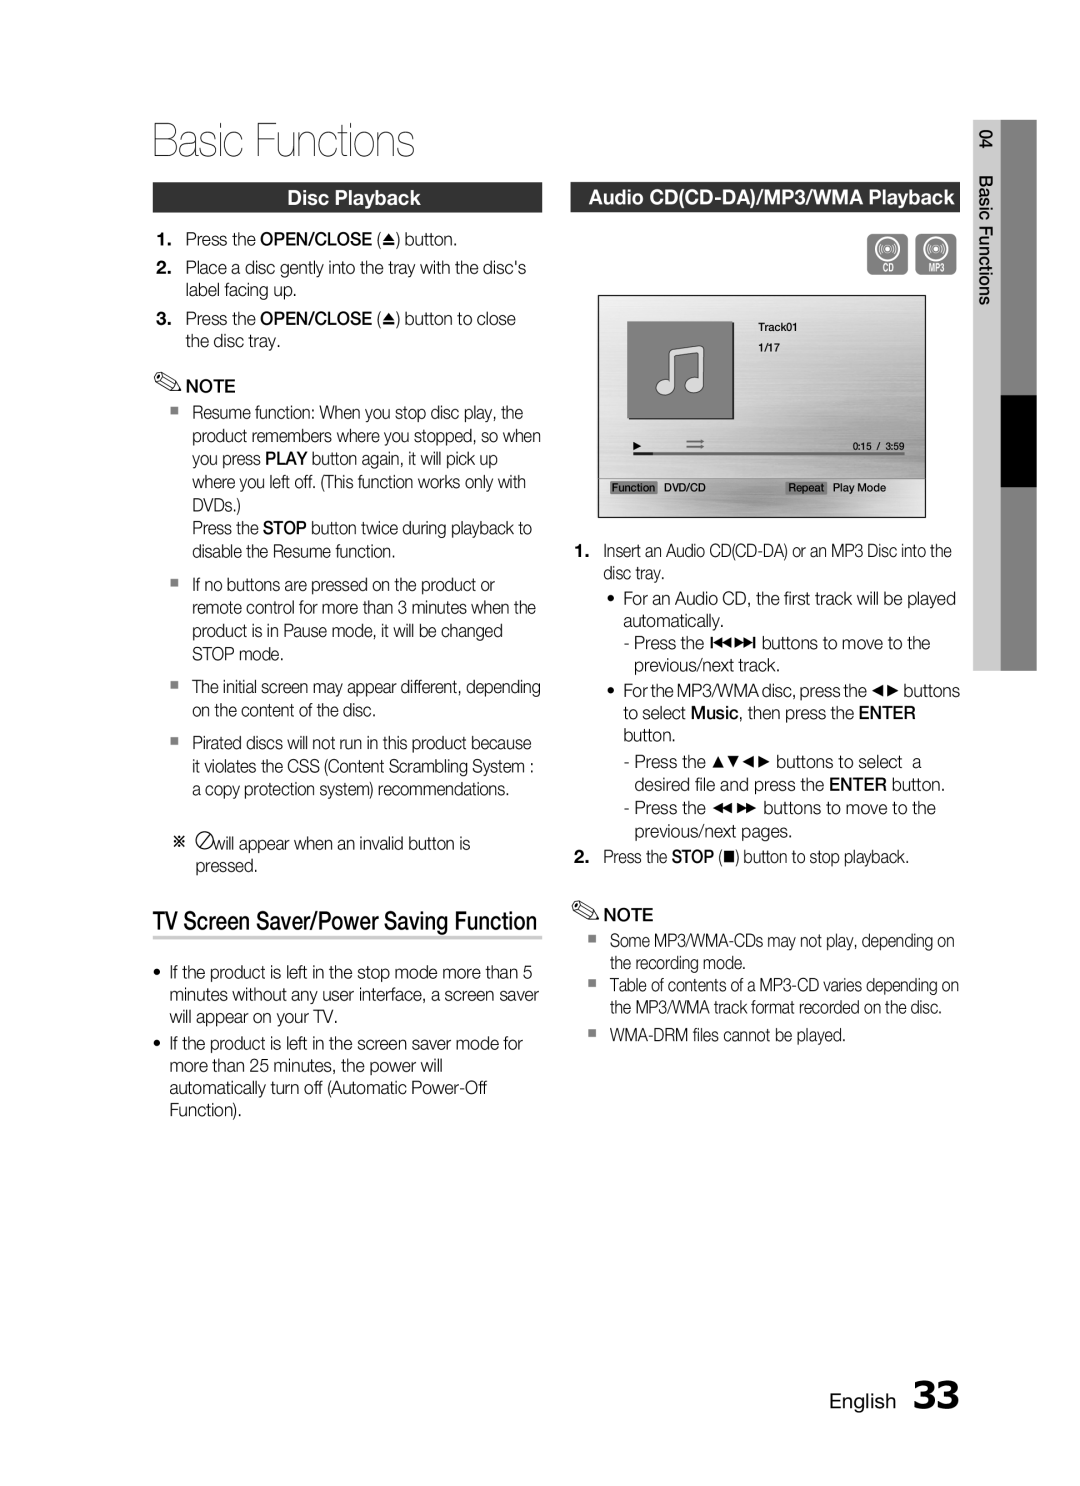 Samsung HT-C550 Basic Functions, TV Screen Saver/Power Saving Function, Disc Playback, Audio CDCD-DA/MP3/WMAPlayback 